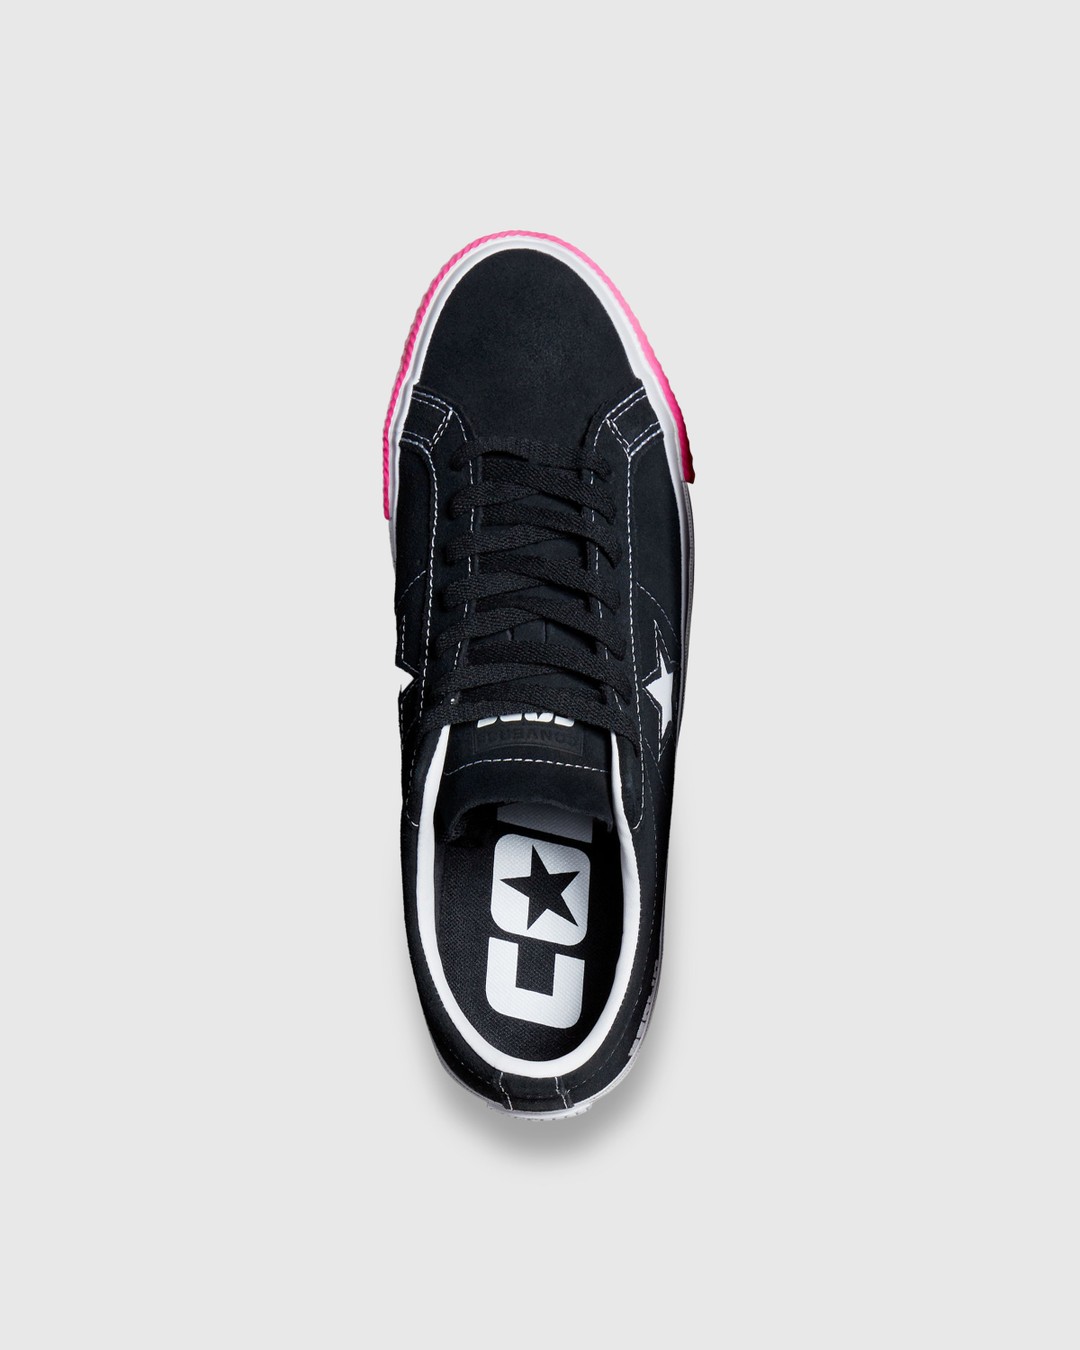 Converse – One Star Pro Berlin Black/Pink - Sneakers - Black - Image 4